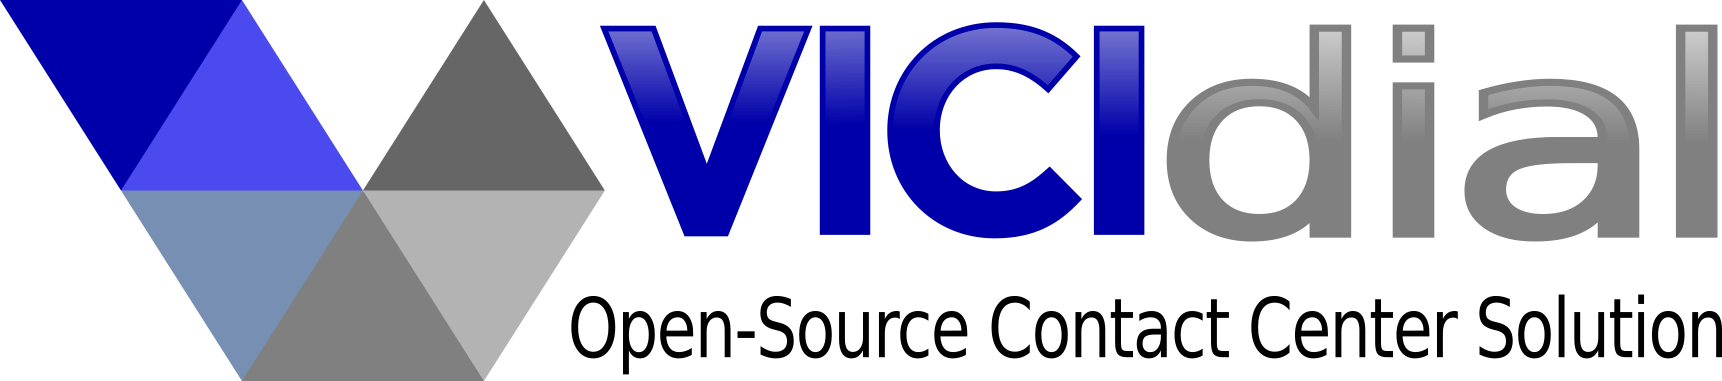 Vicidial_vector_blue_short_20170524